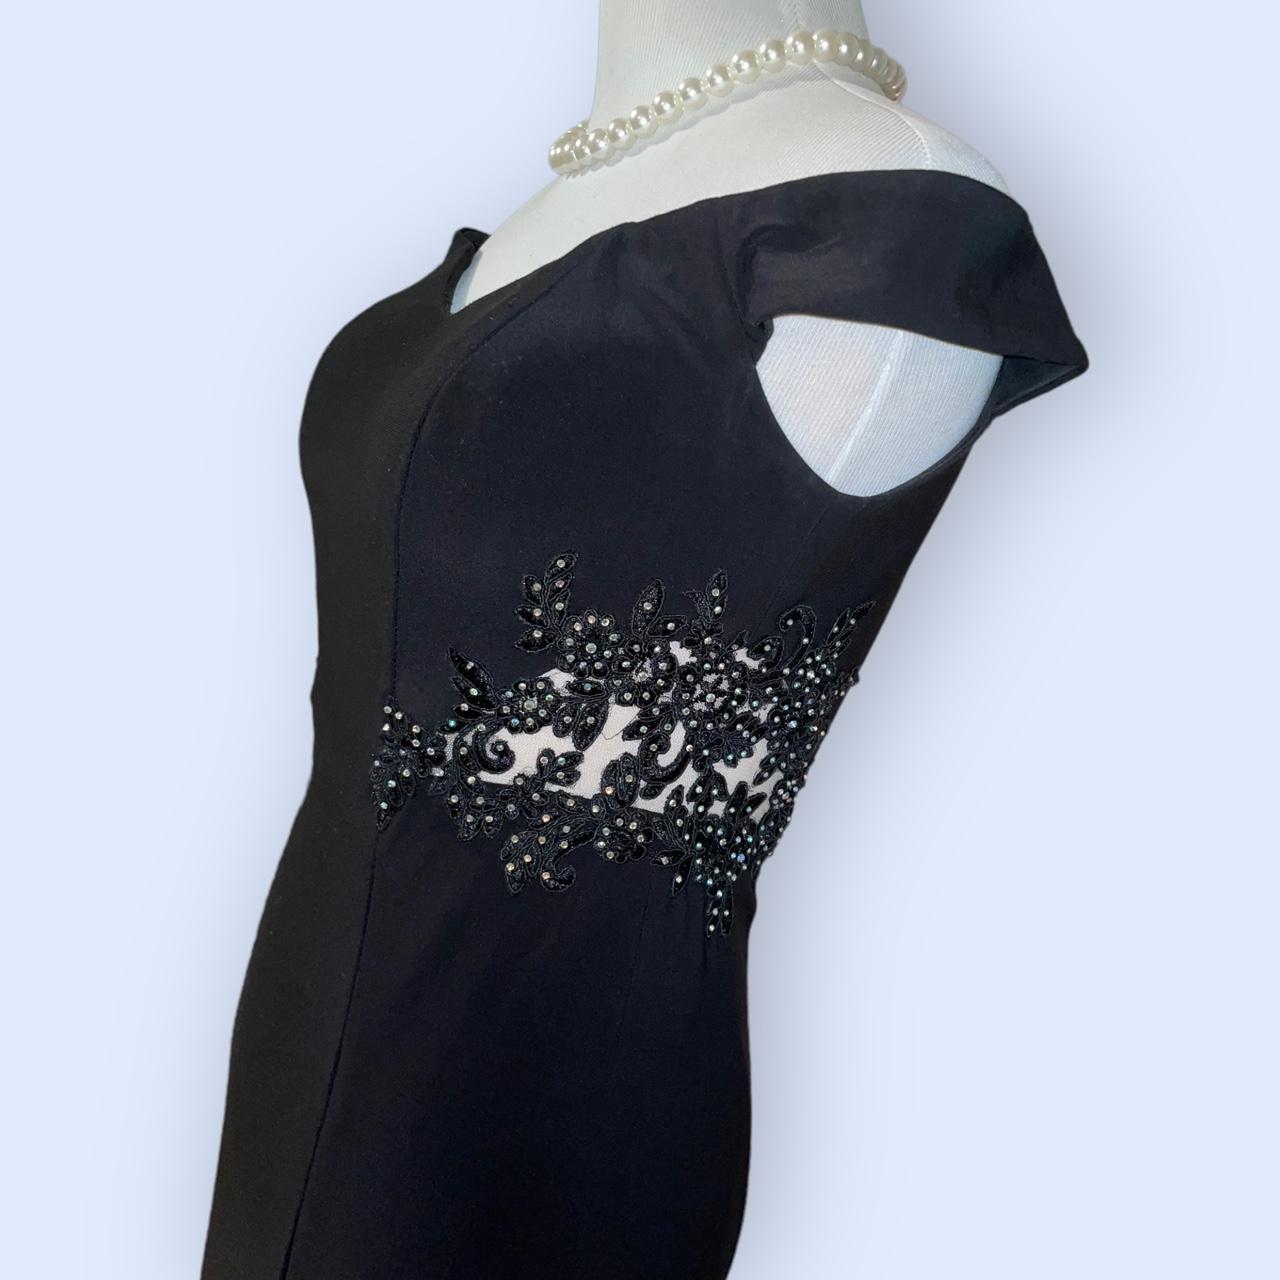 Product Image 3 - Blondie Nites Elegant Prom Dress

Description: